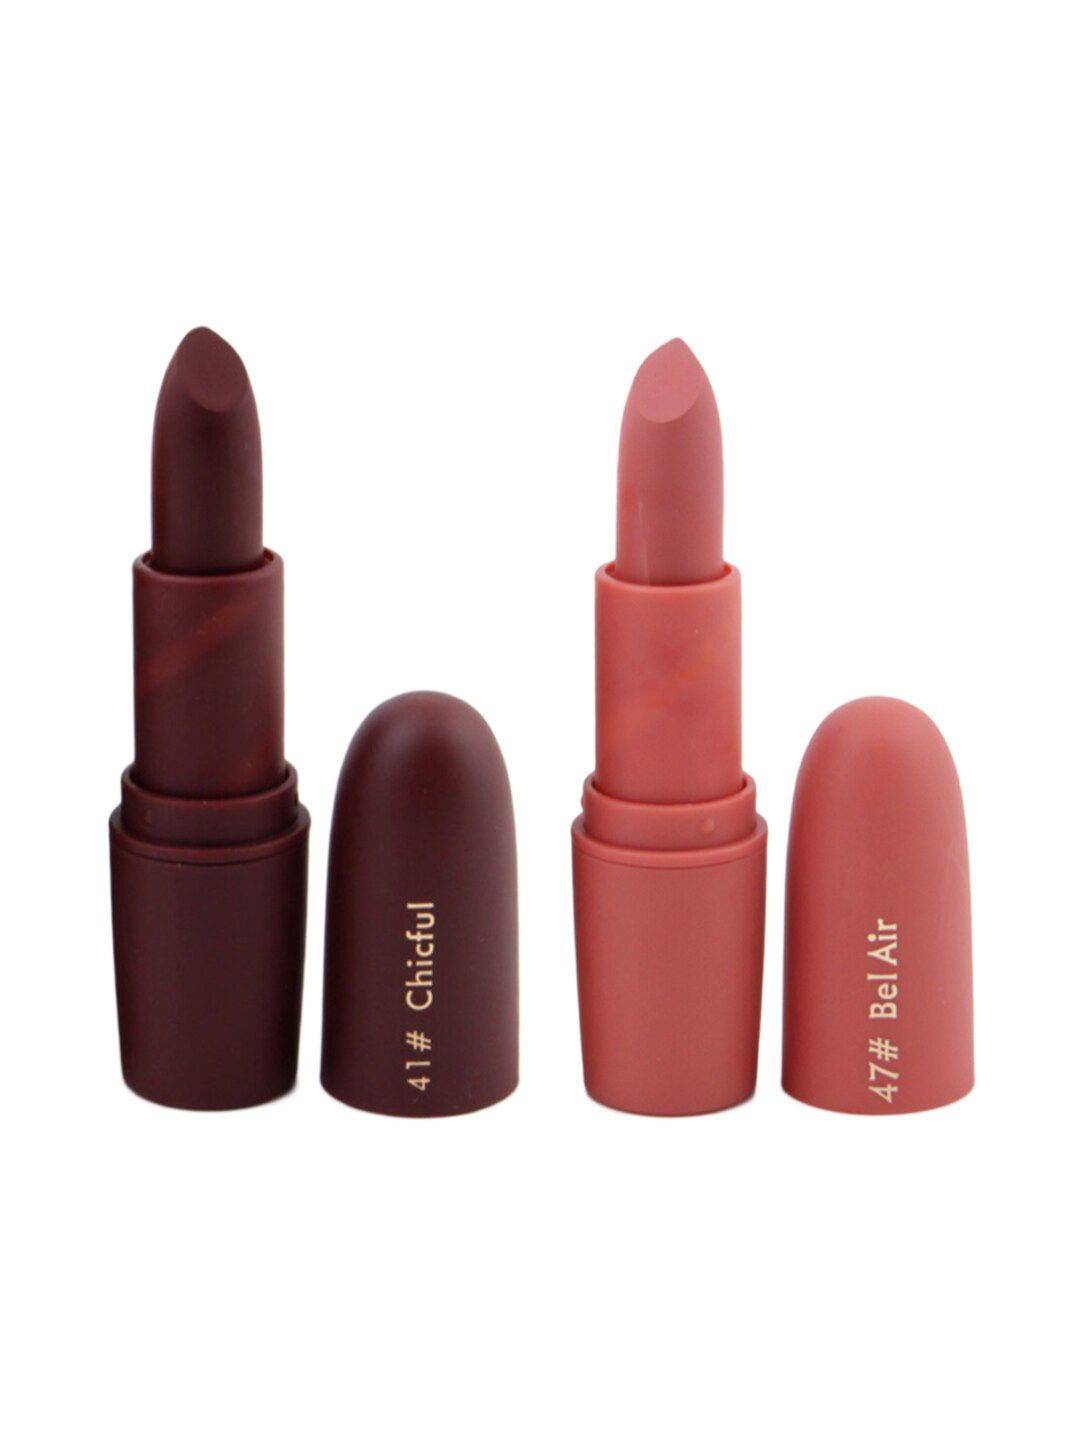 MISS ROSE Professional Make-Up Set of 2 Matte Creamy Lipsticks - Chicful 41 & Bel Air 47 Price in India